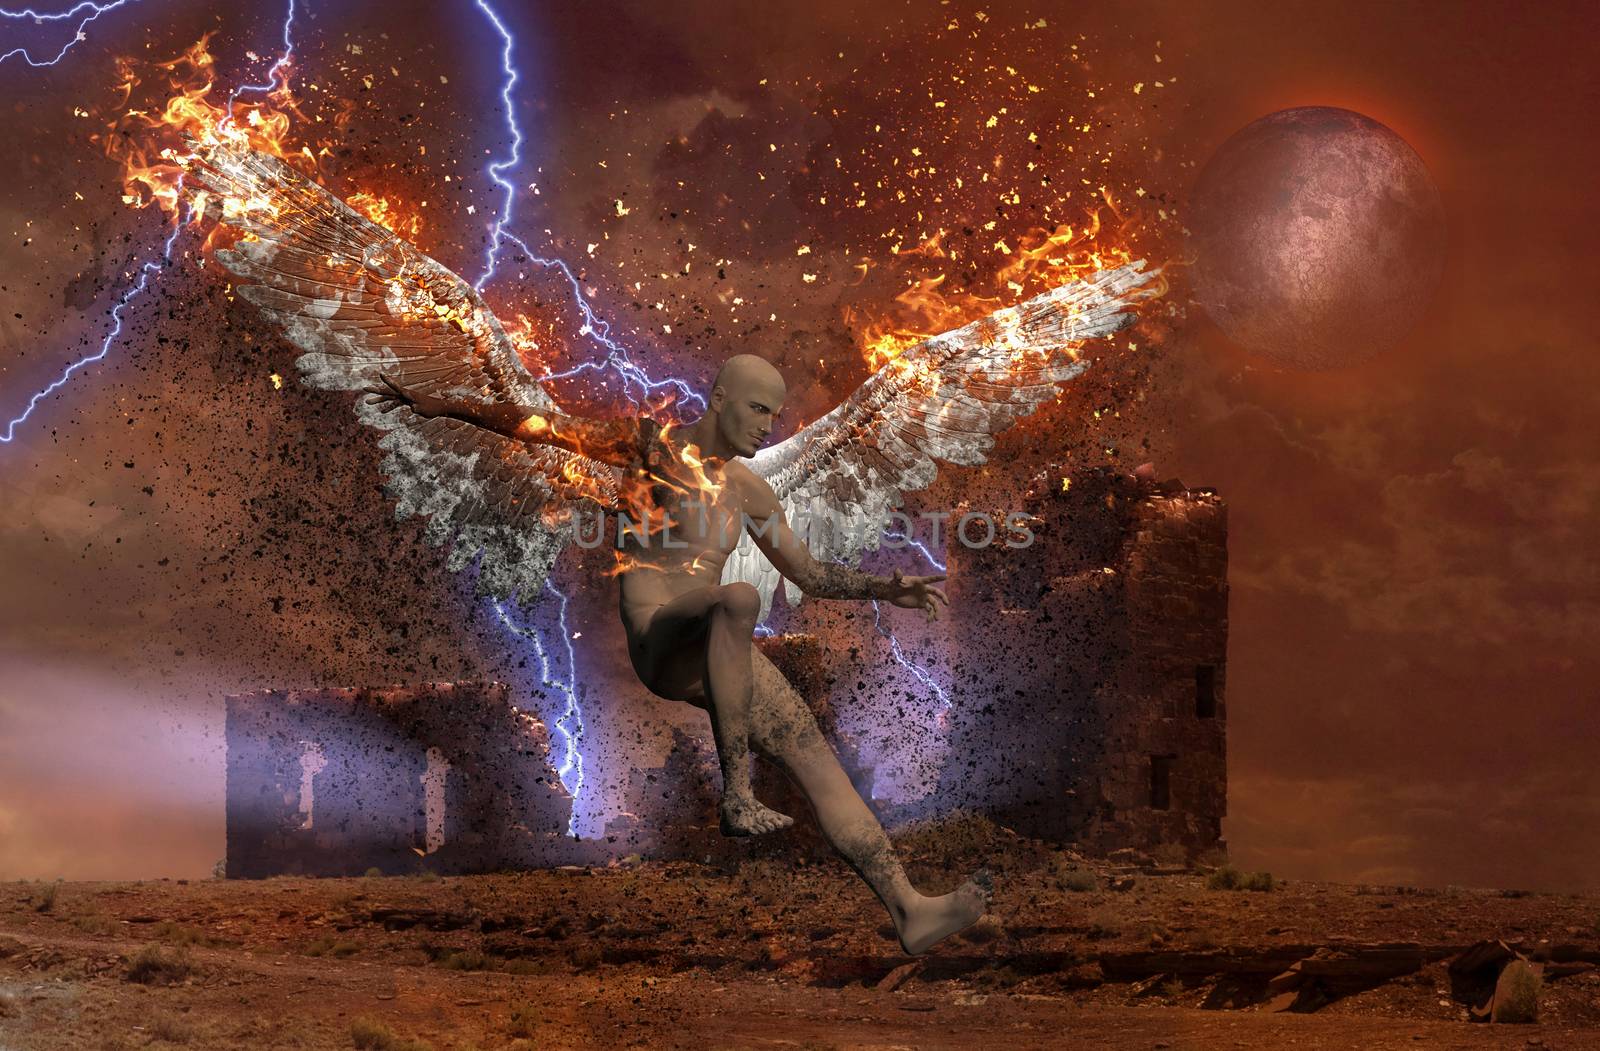 Surreal digital art. Lightning strikes spooky ruins. Naked man with burning wings symbolizes fallen angel.